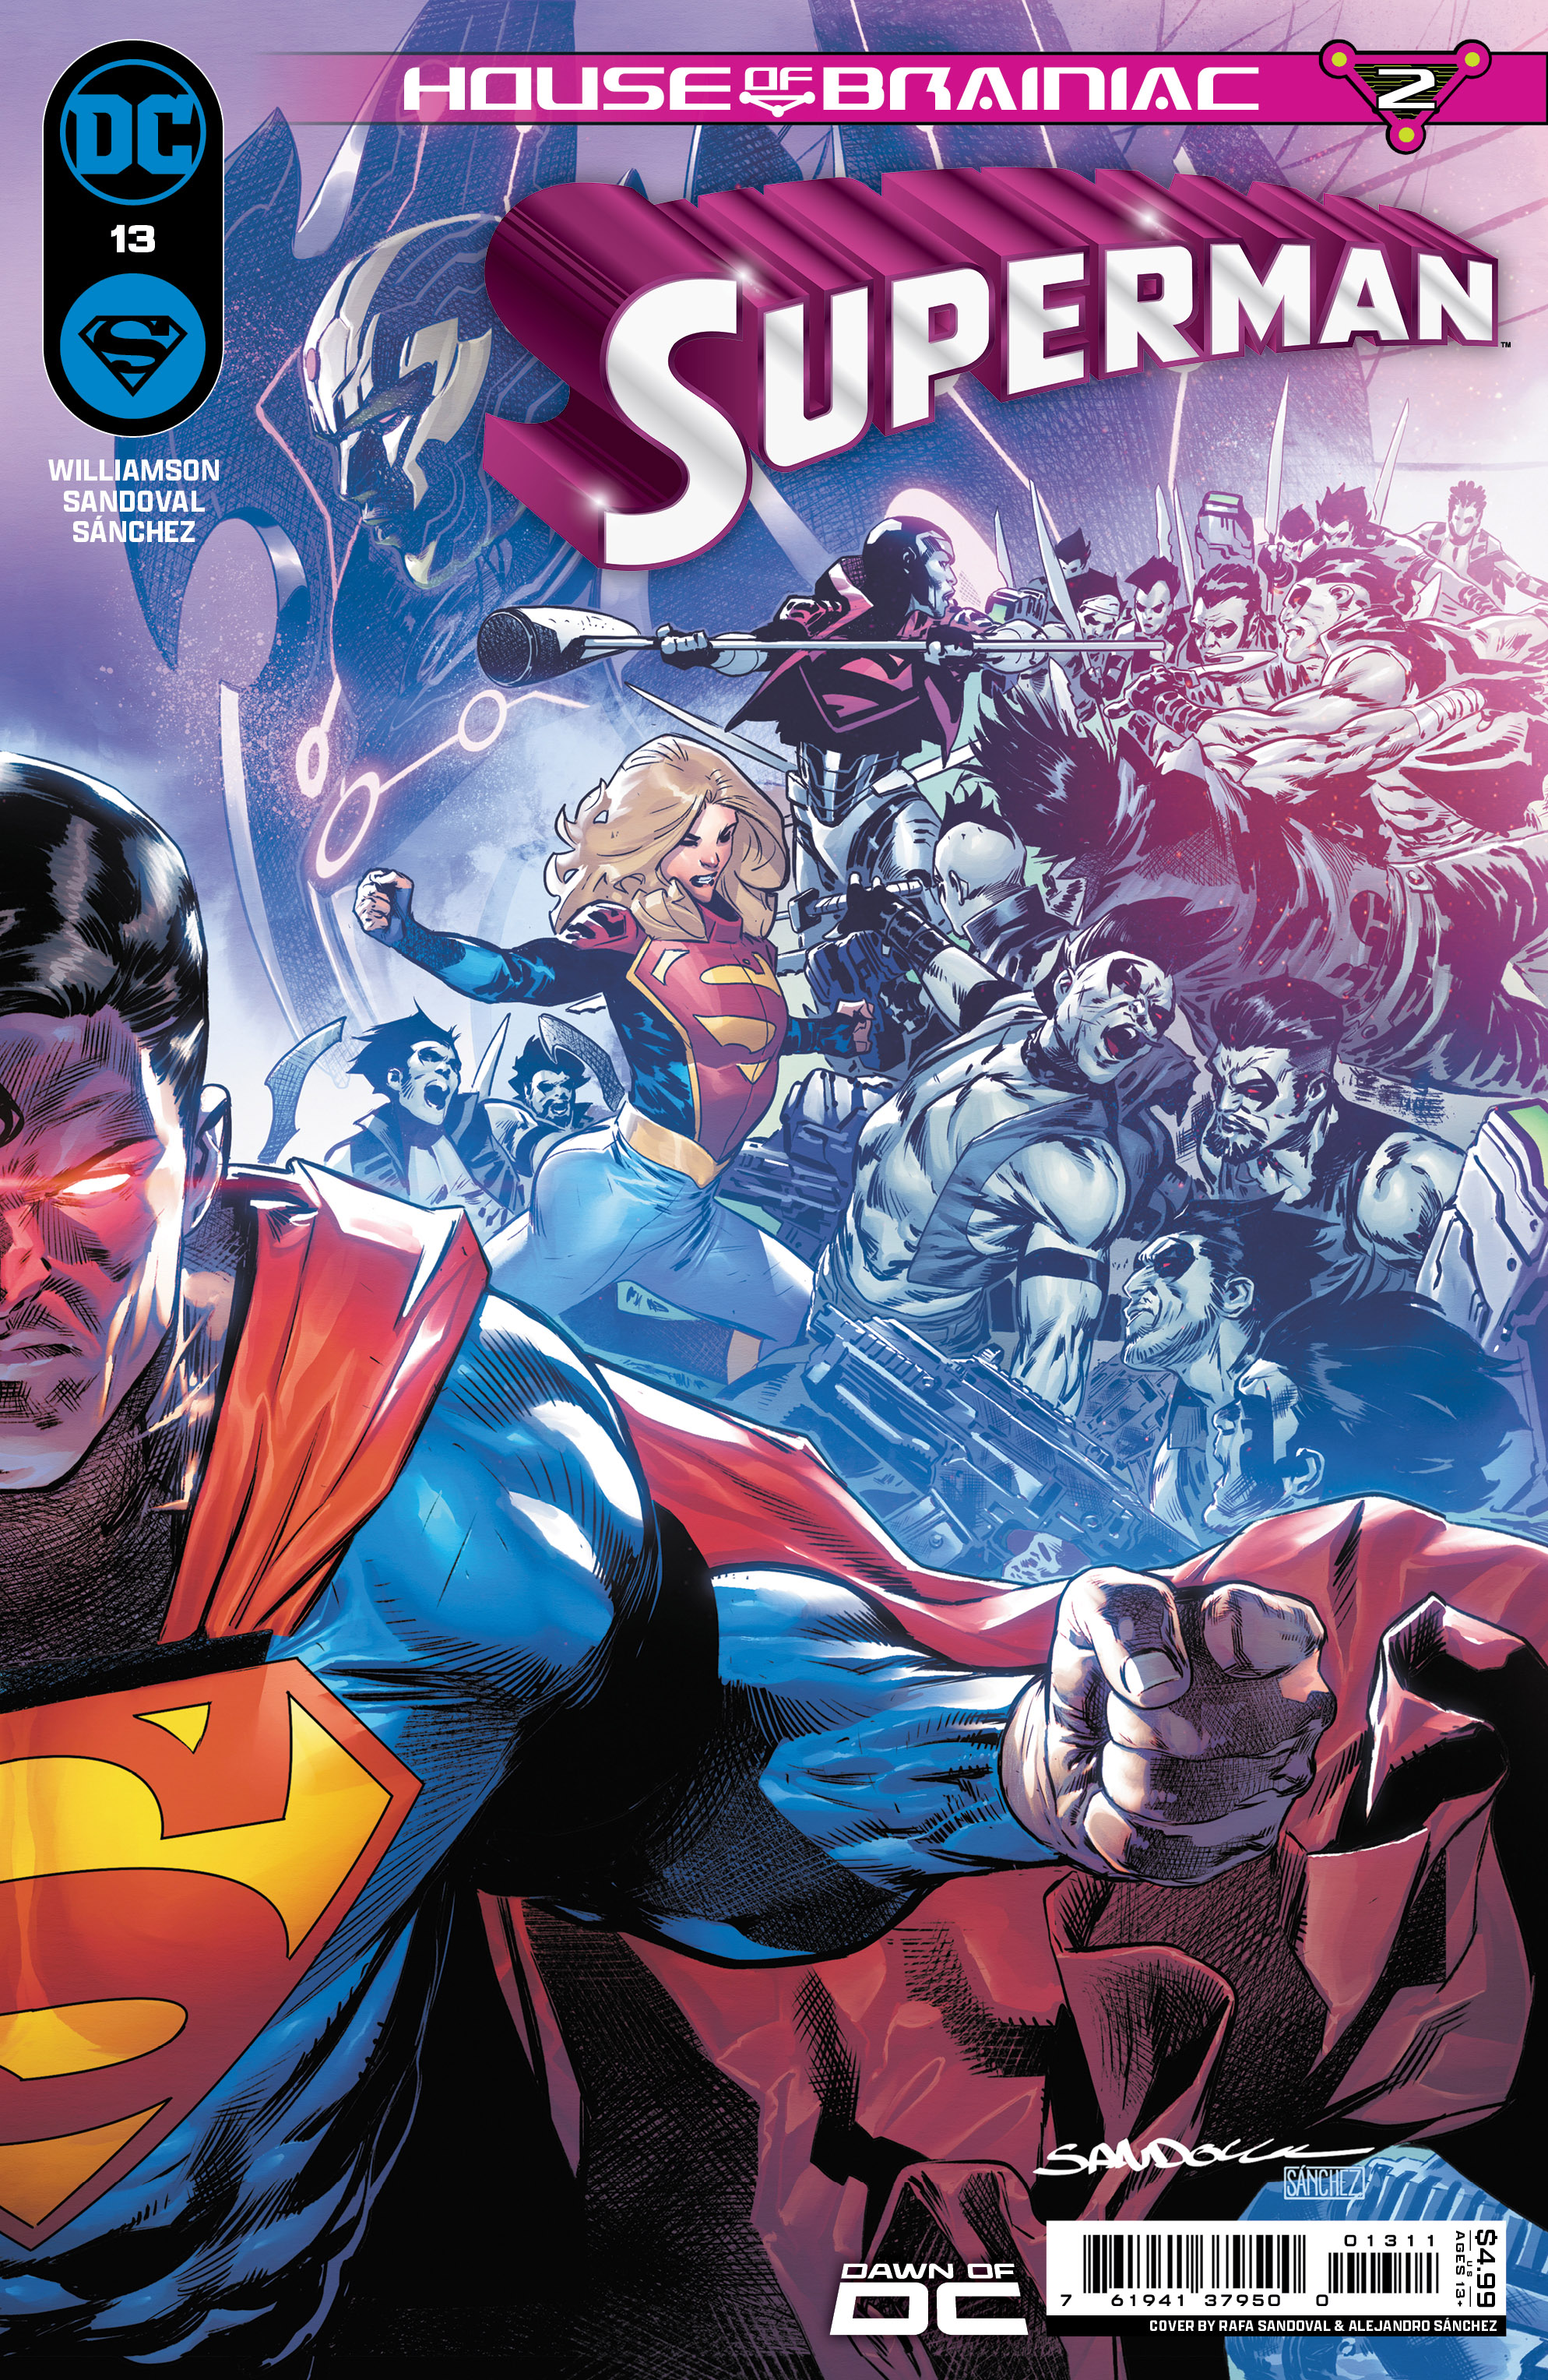 Superman #13 Cover A Rafa Sandoval Connecting (House of Brainiac)